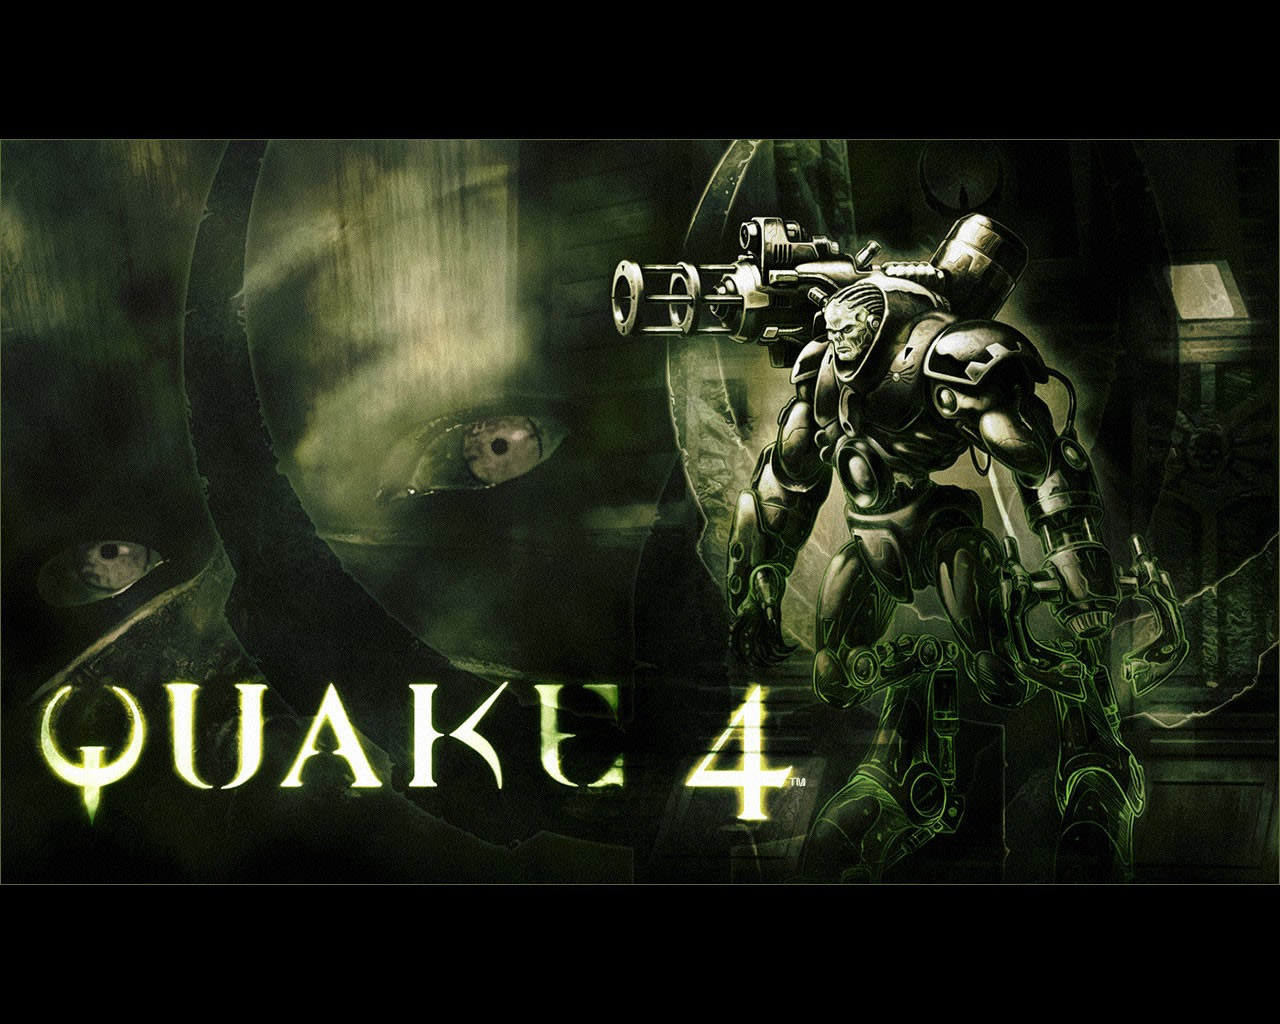    Quake IV